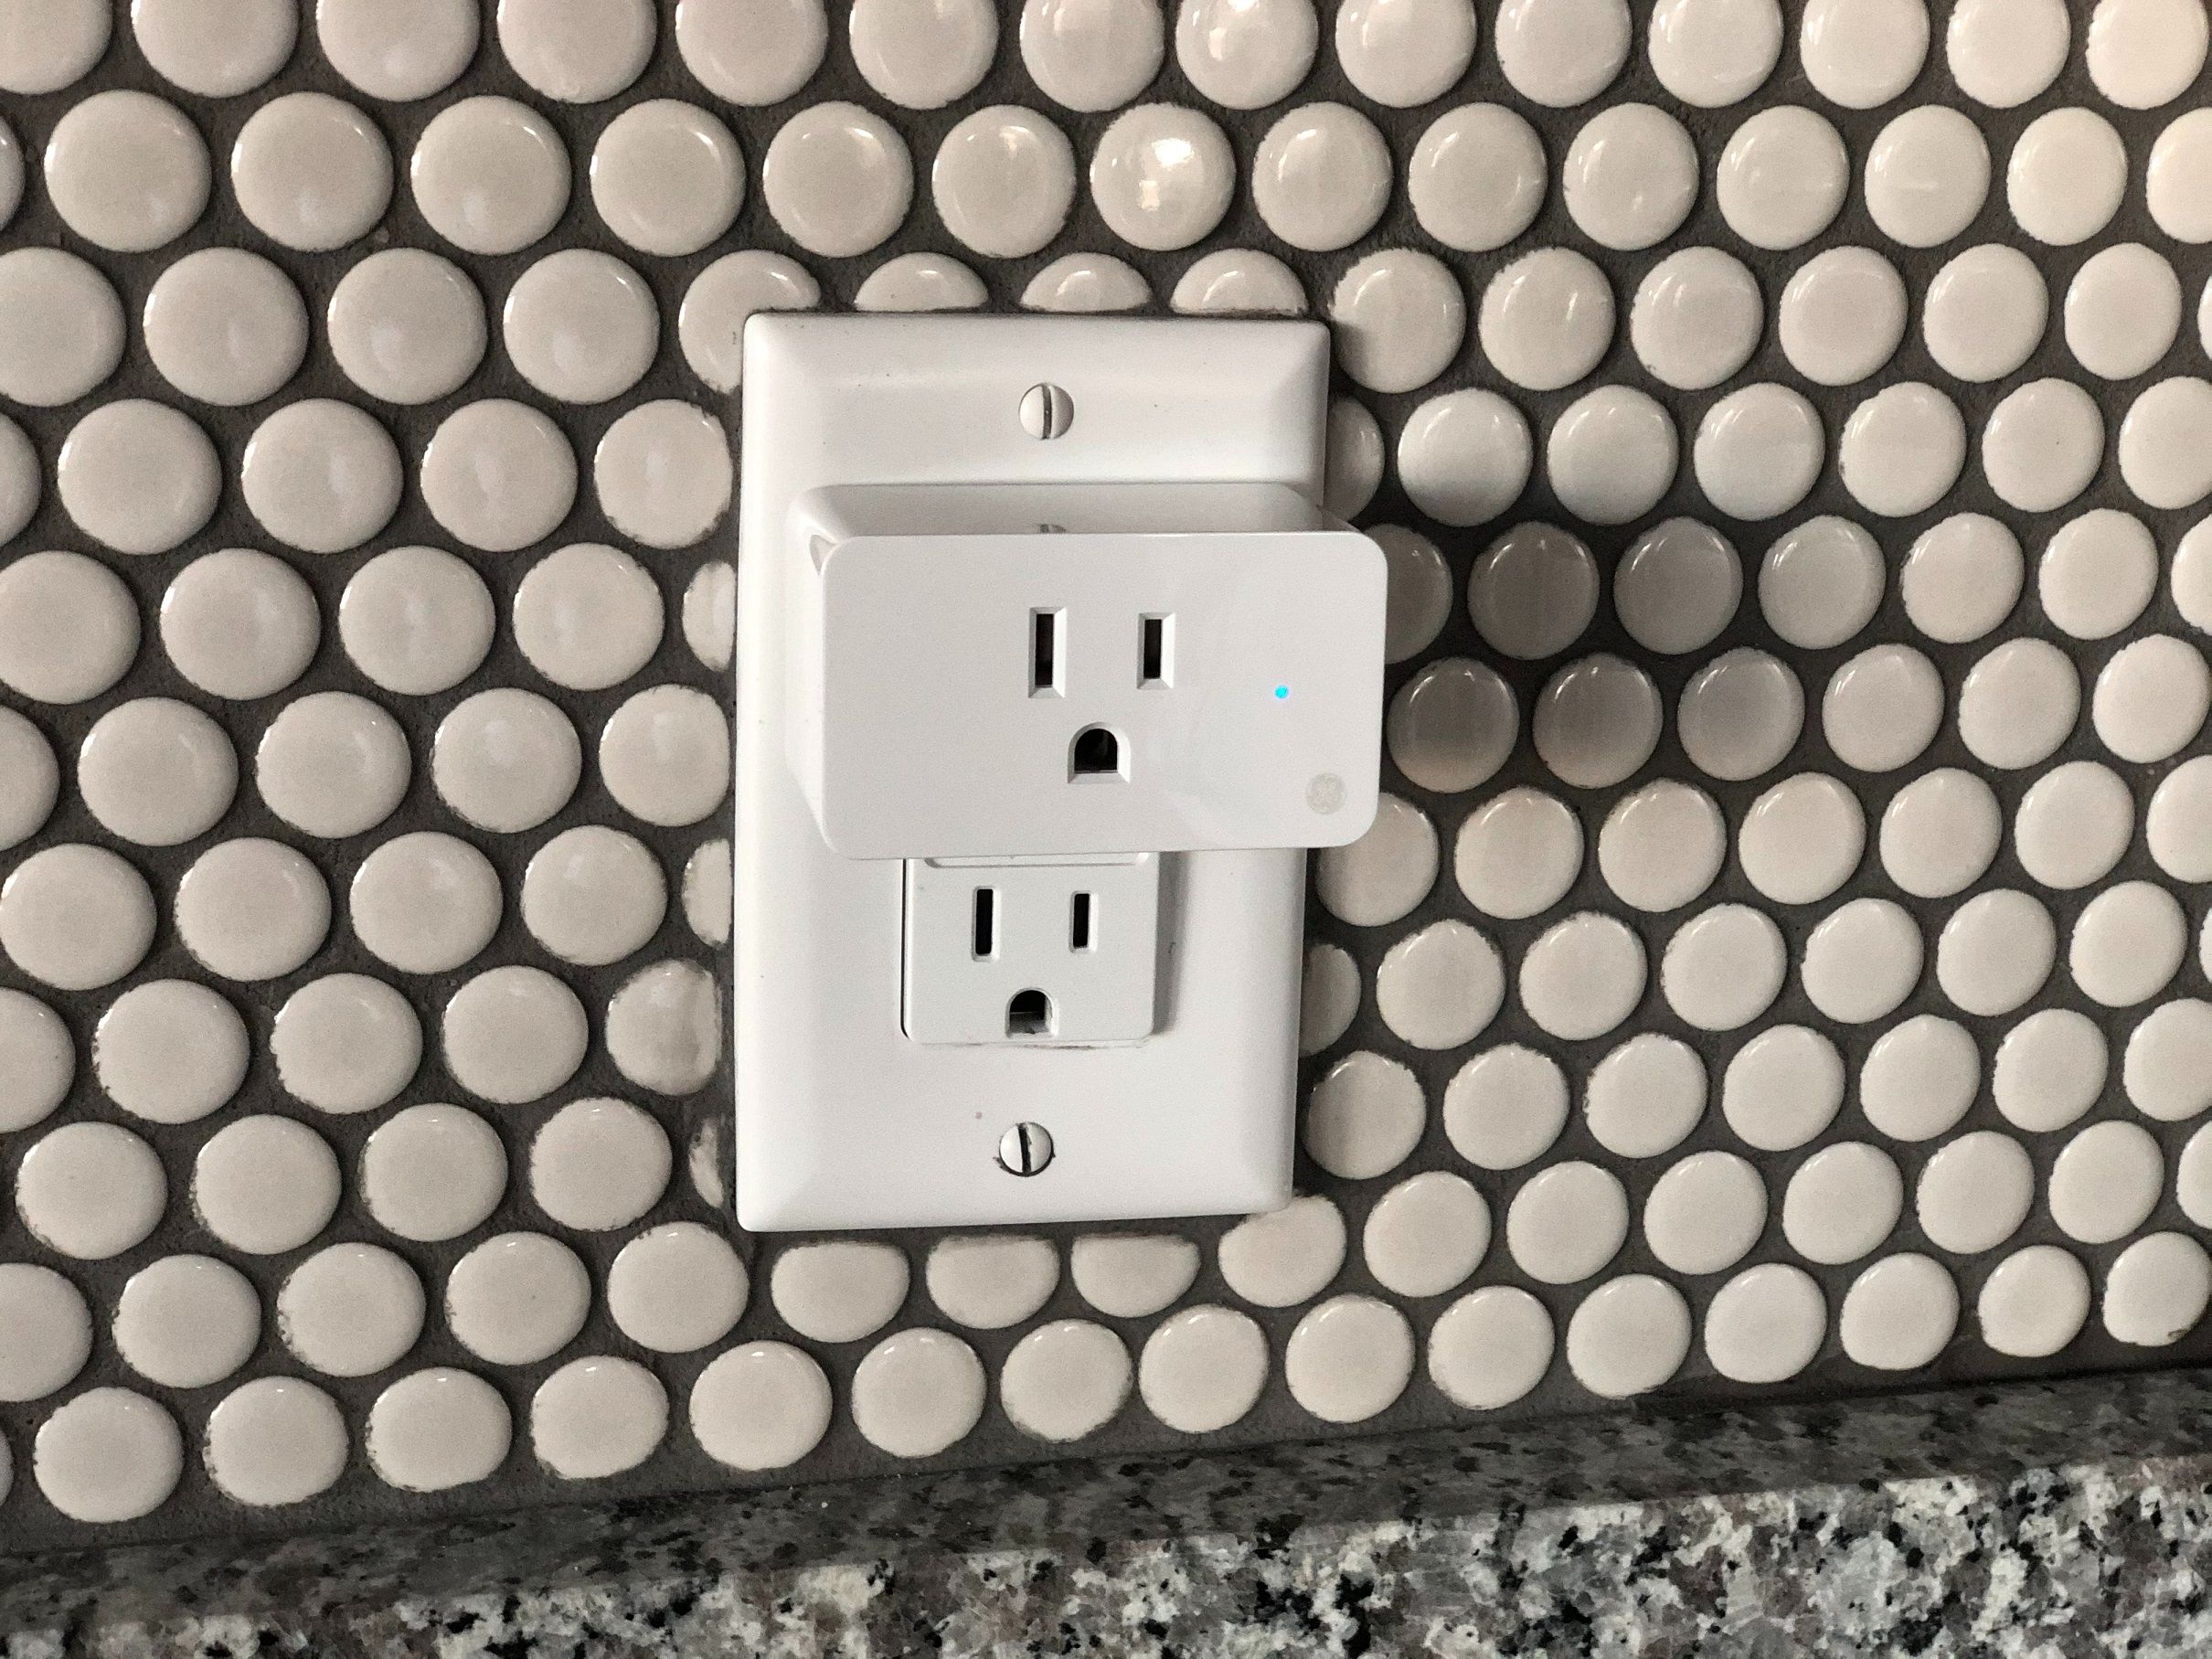 A smart plug plugged into a kitchen socket.